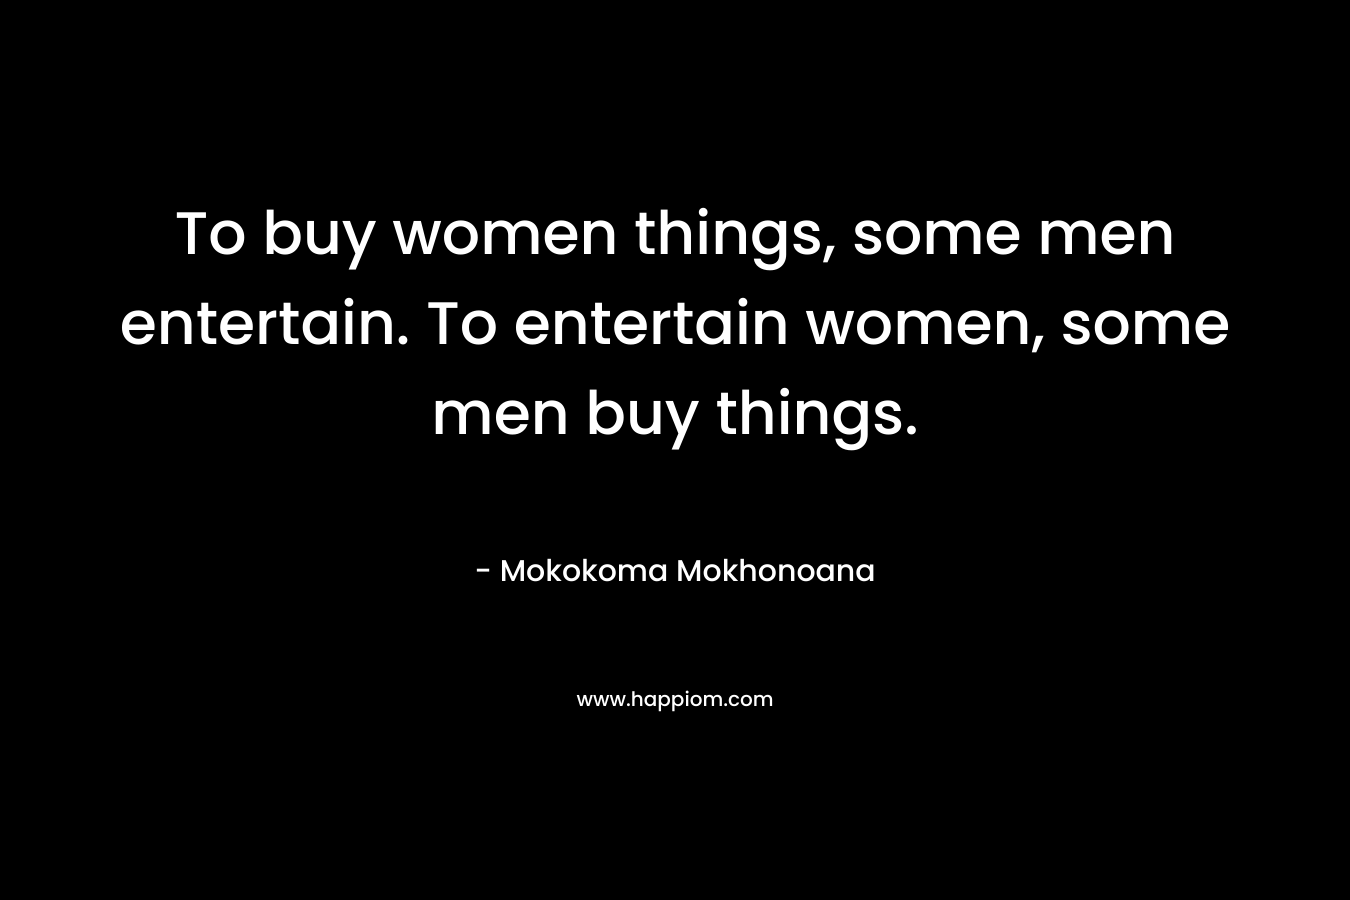 To buy women things, some men entertain. To entertain women, some men buy things.